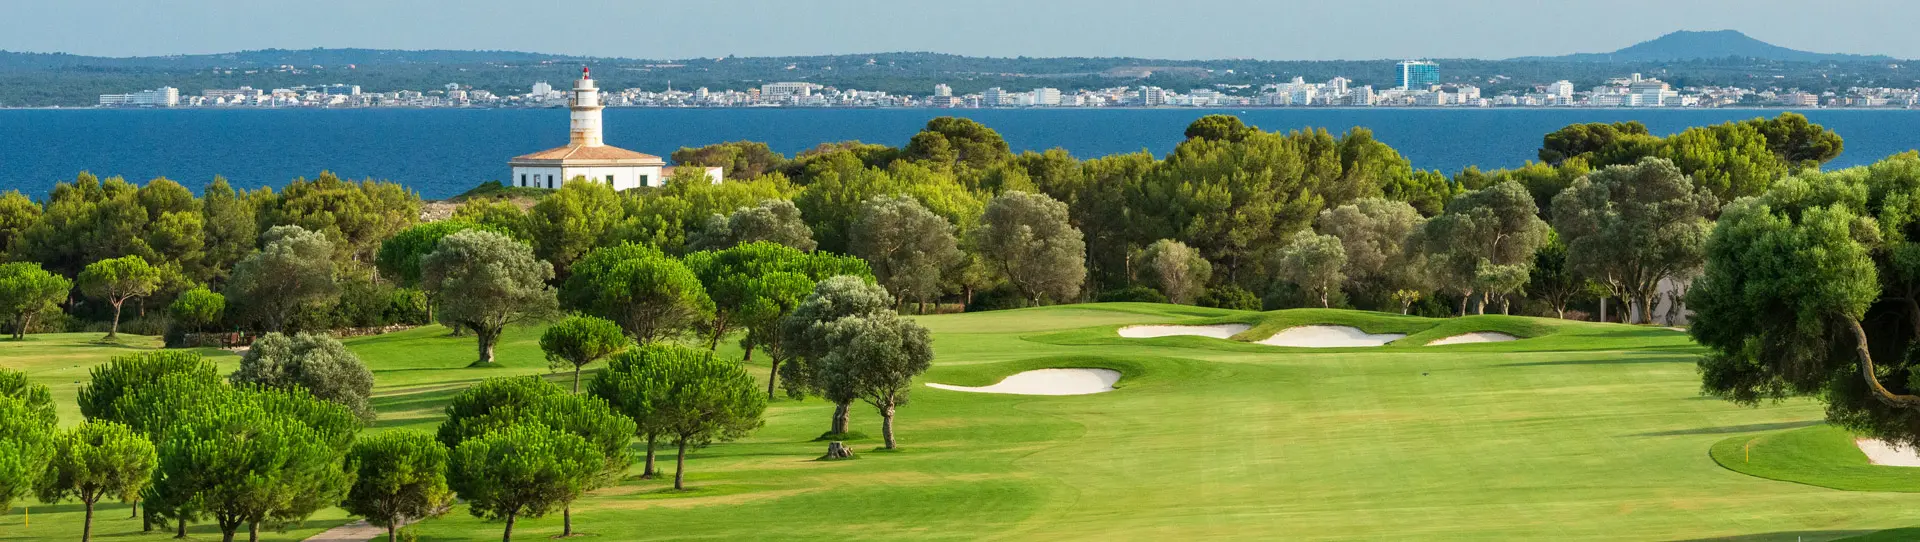 Spain Golf Driving Range - Club de Golf Alcanada Driving Range - Photo 1